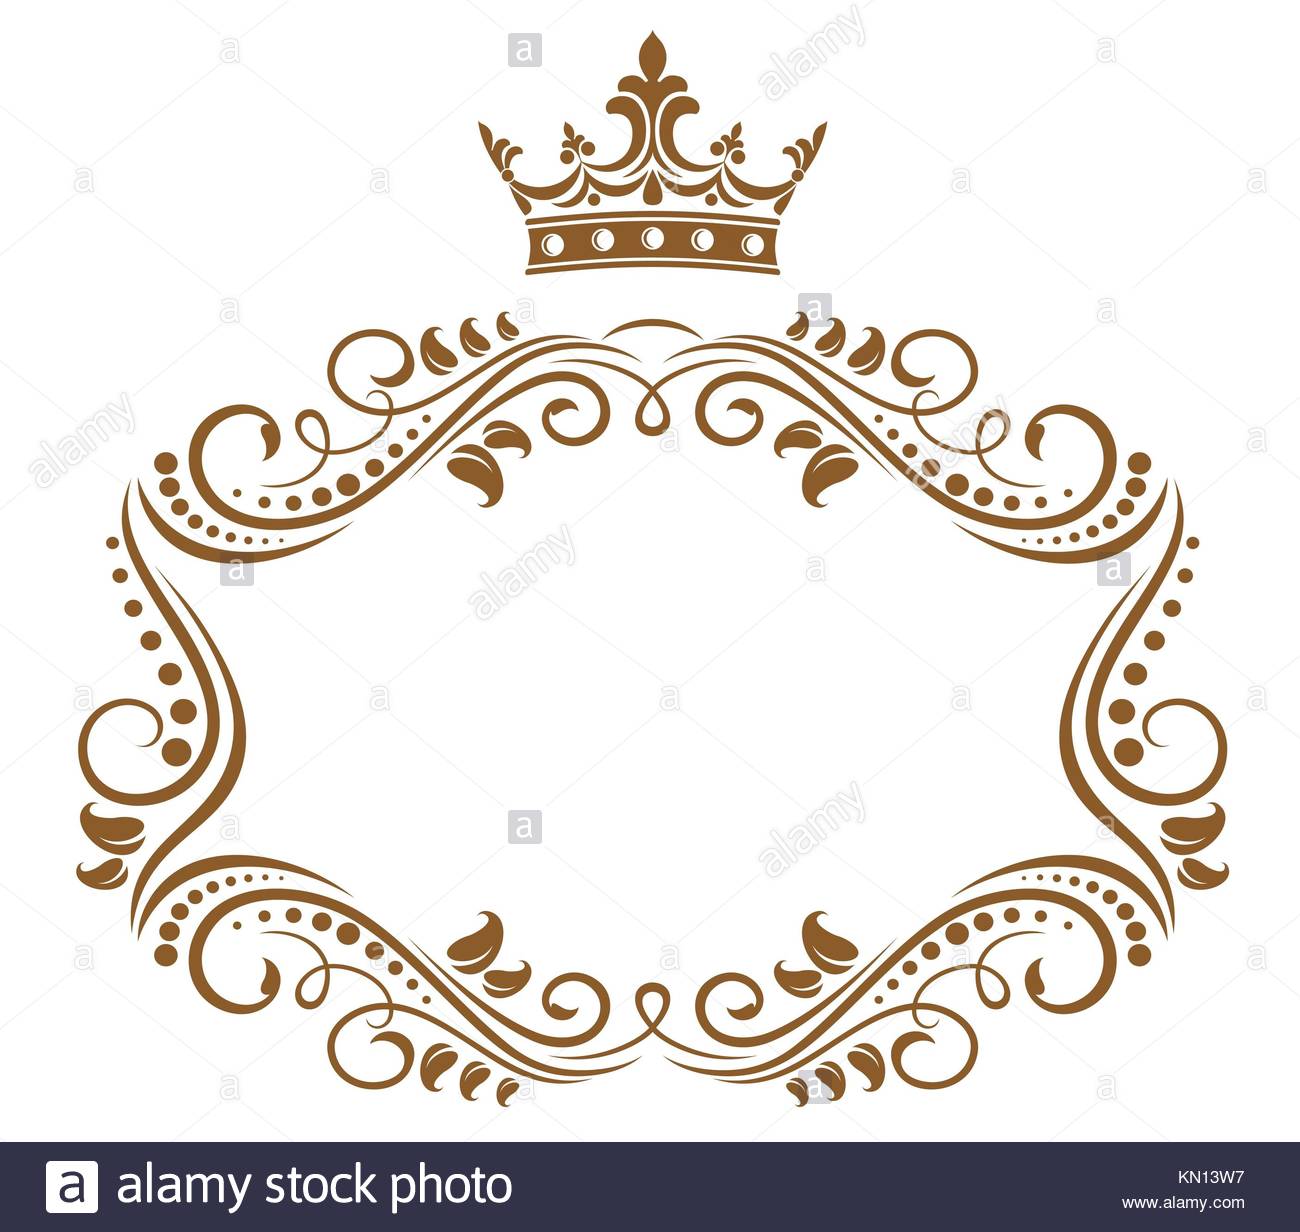 Download Royal Crown Emblem Stock Photos & Royal Crown Emblem Stock ...